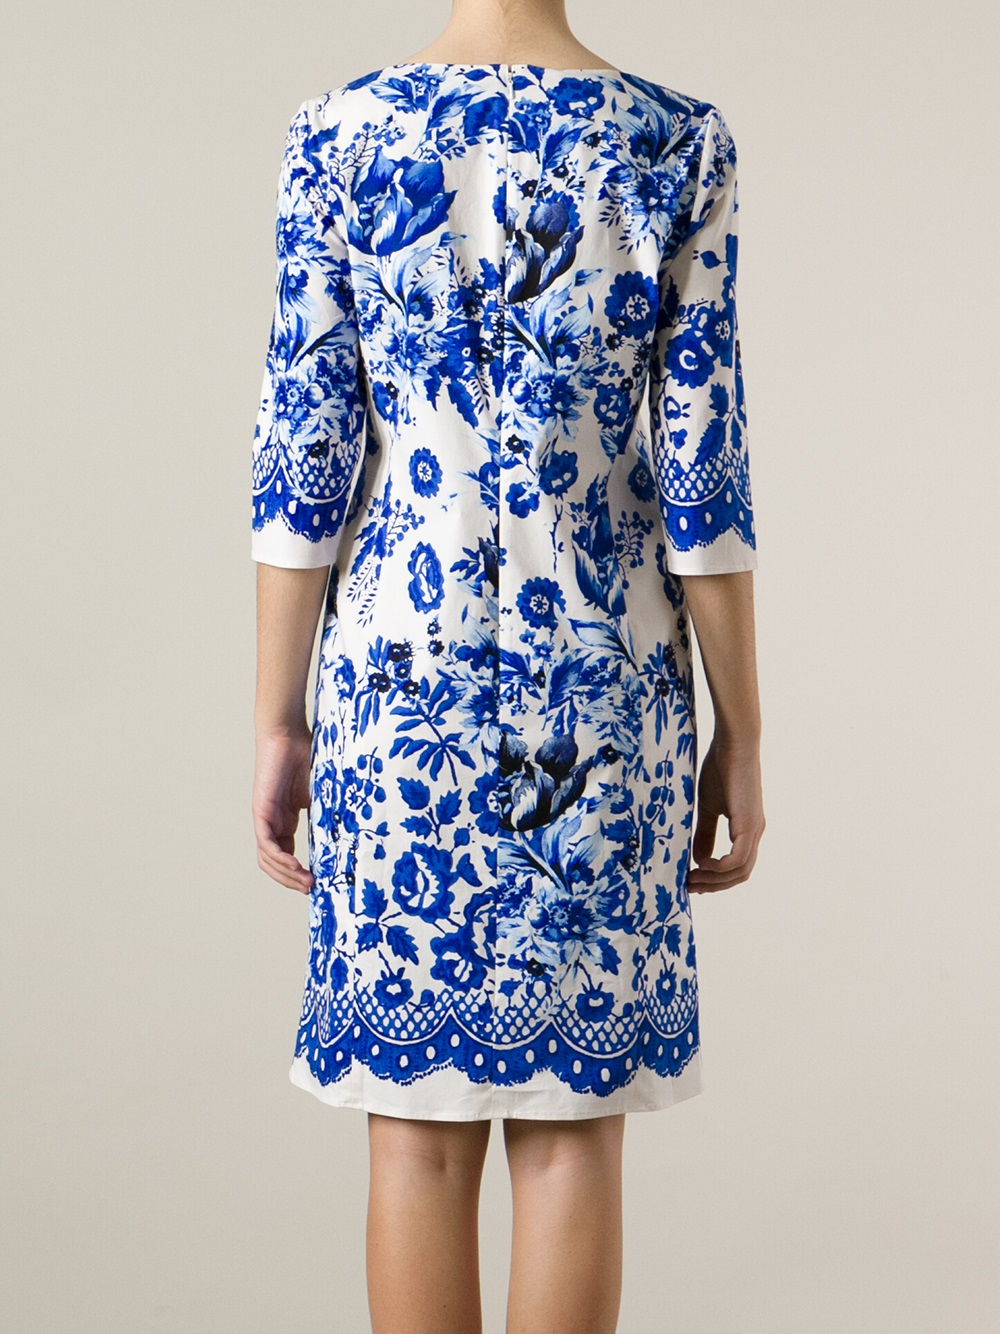 Oscar de la Renta Floral Print Dress in White (Blue) - Lyst